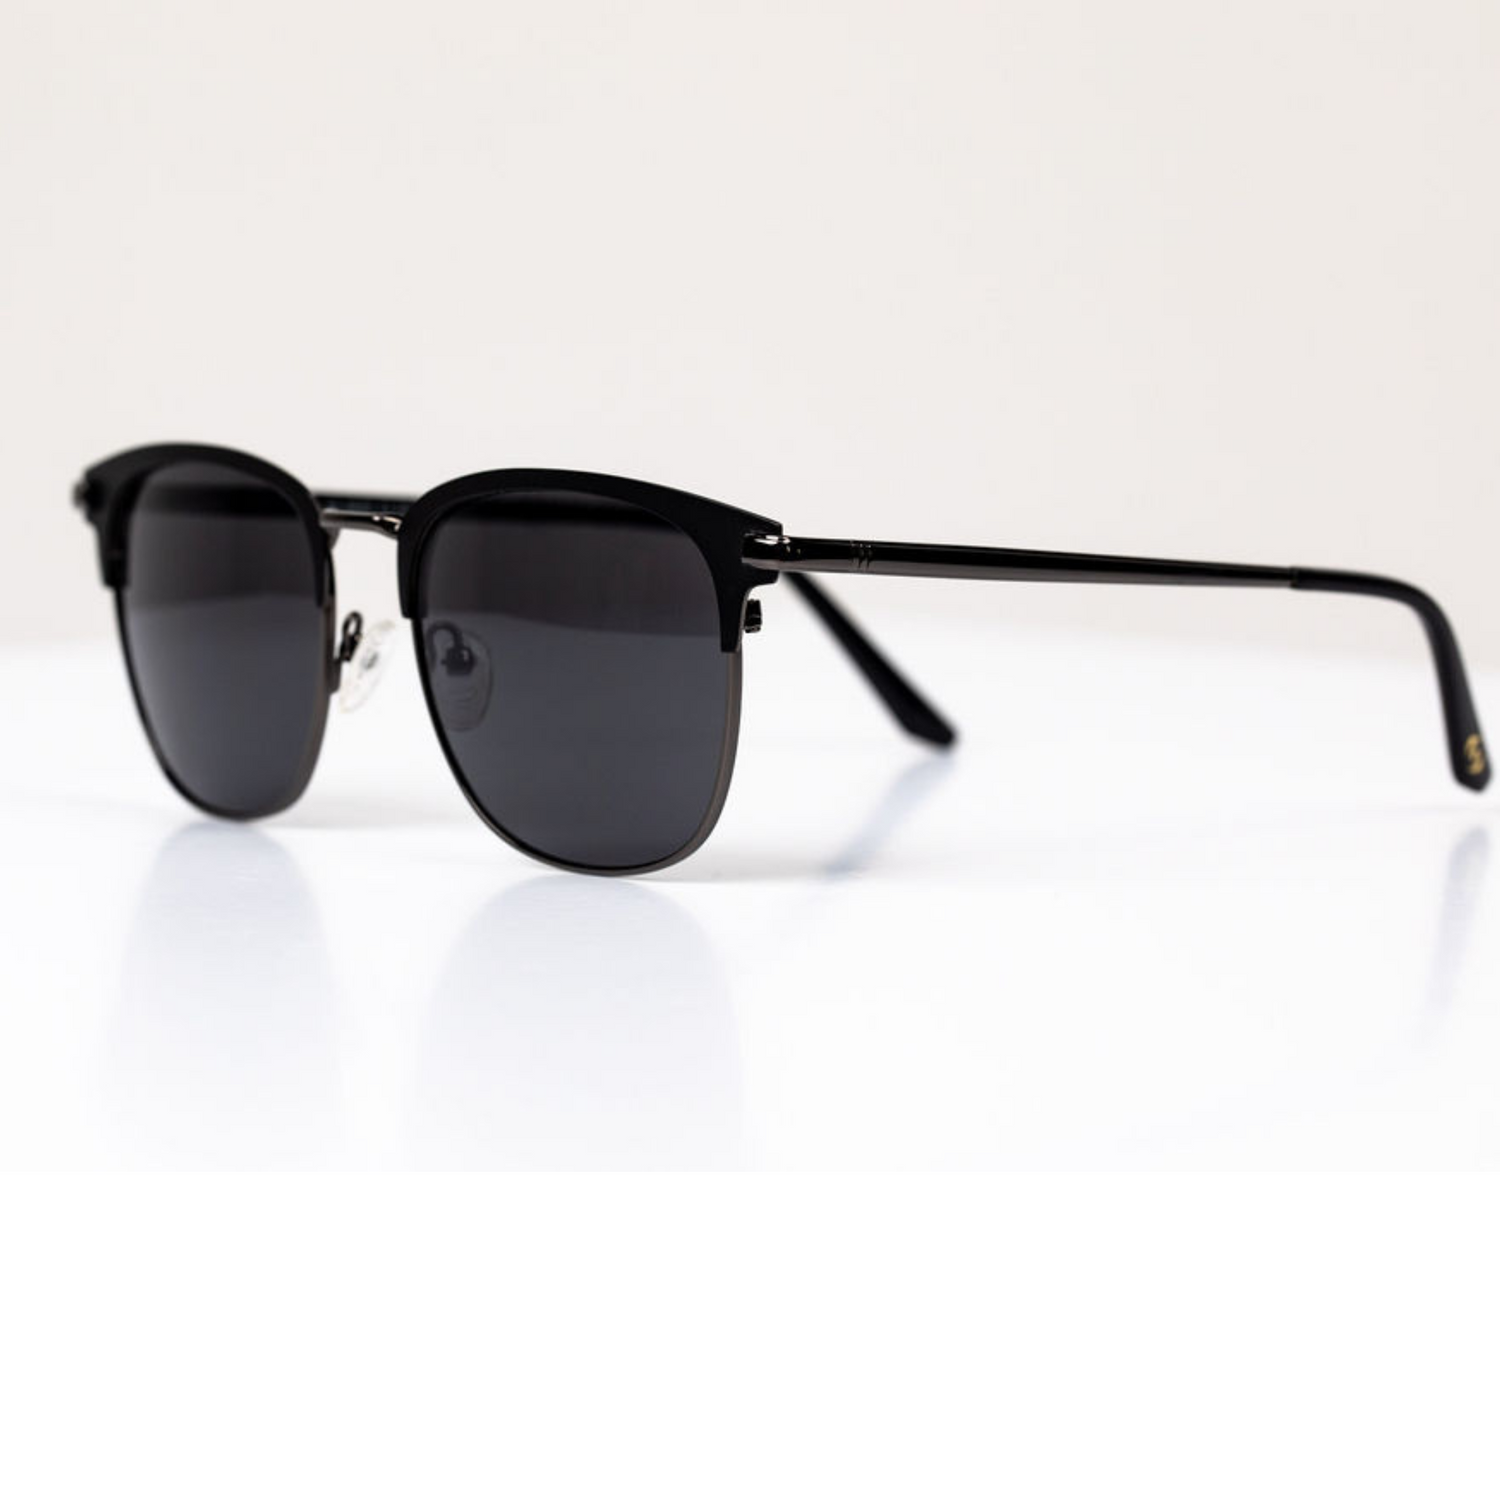 Grady - Blue Eye Sunglasses: Shatter Resistant Sunglasses Aviator